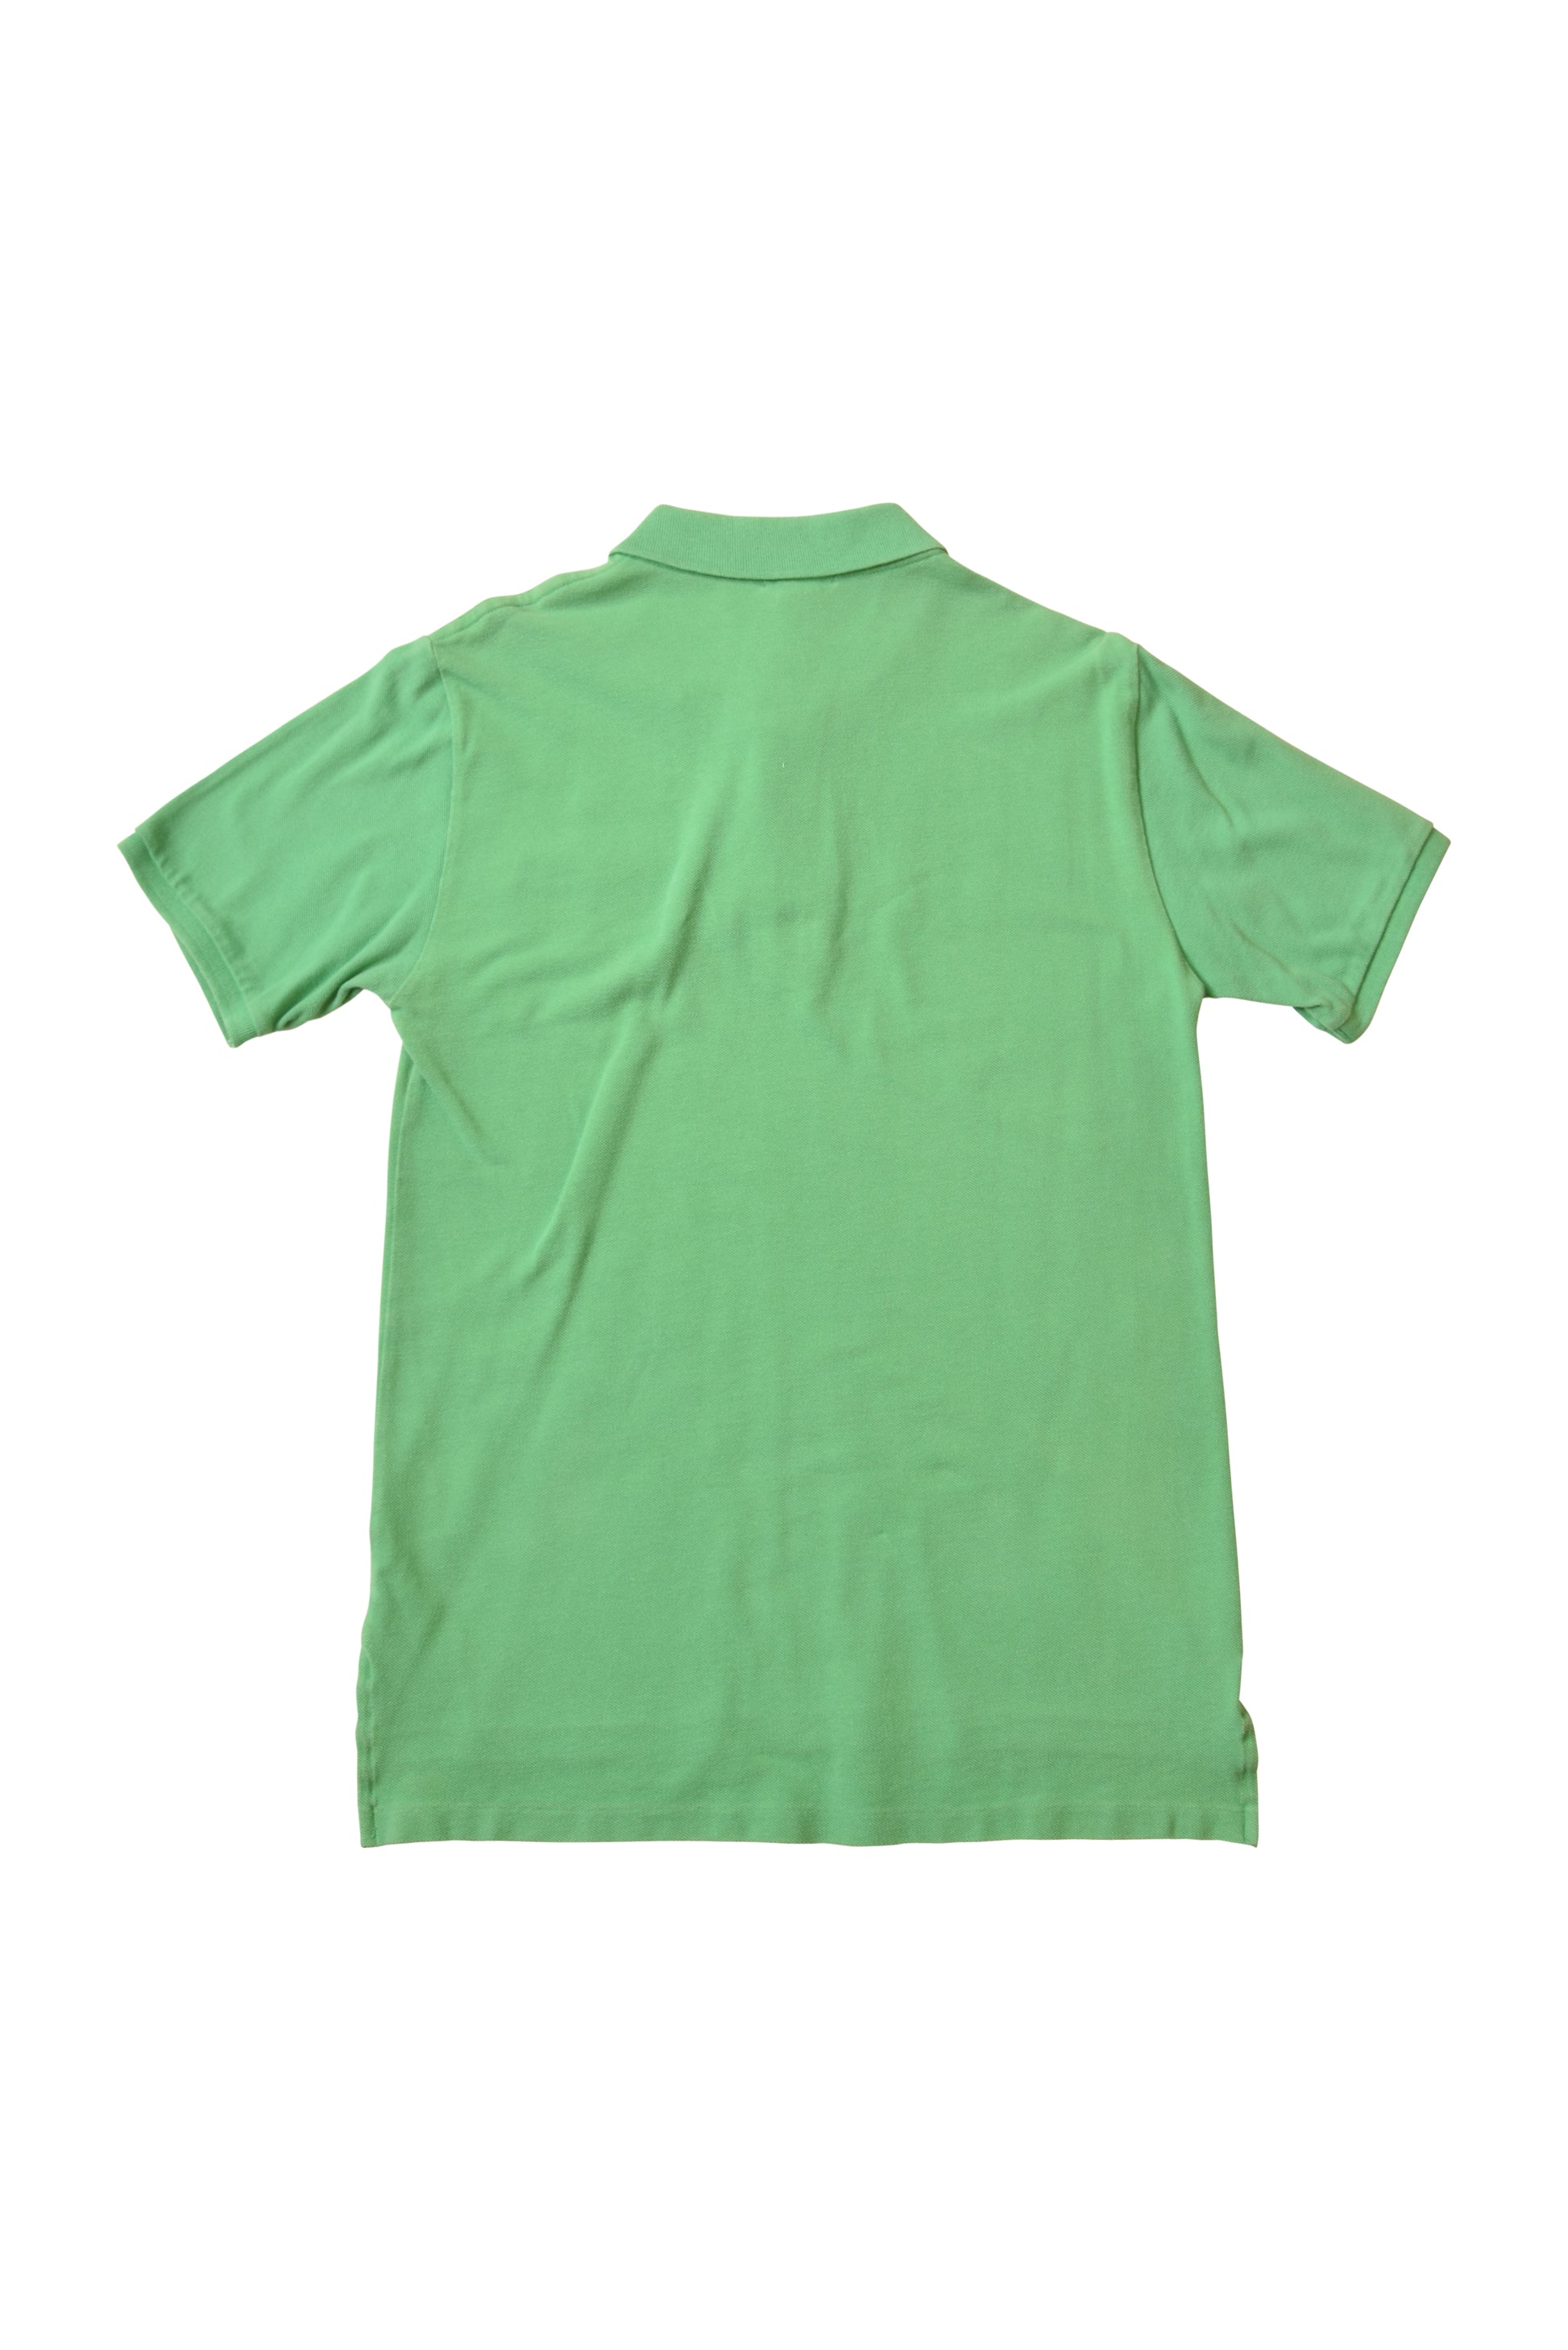 Vintage Ralph Lauren Polo Shirt Green Size S-M